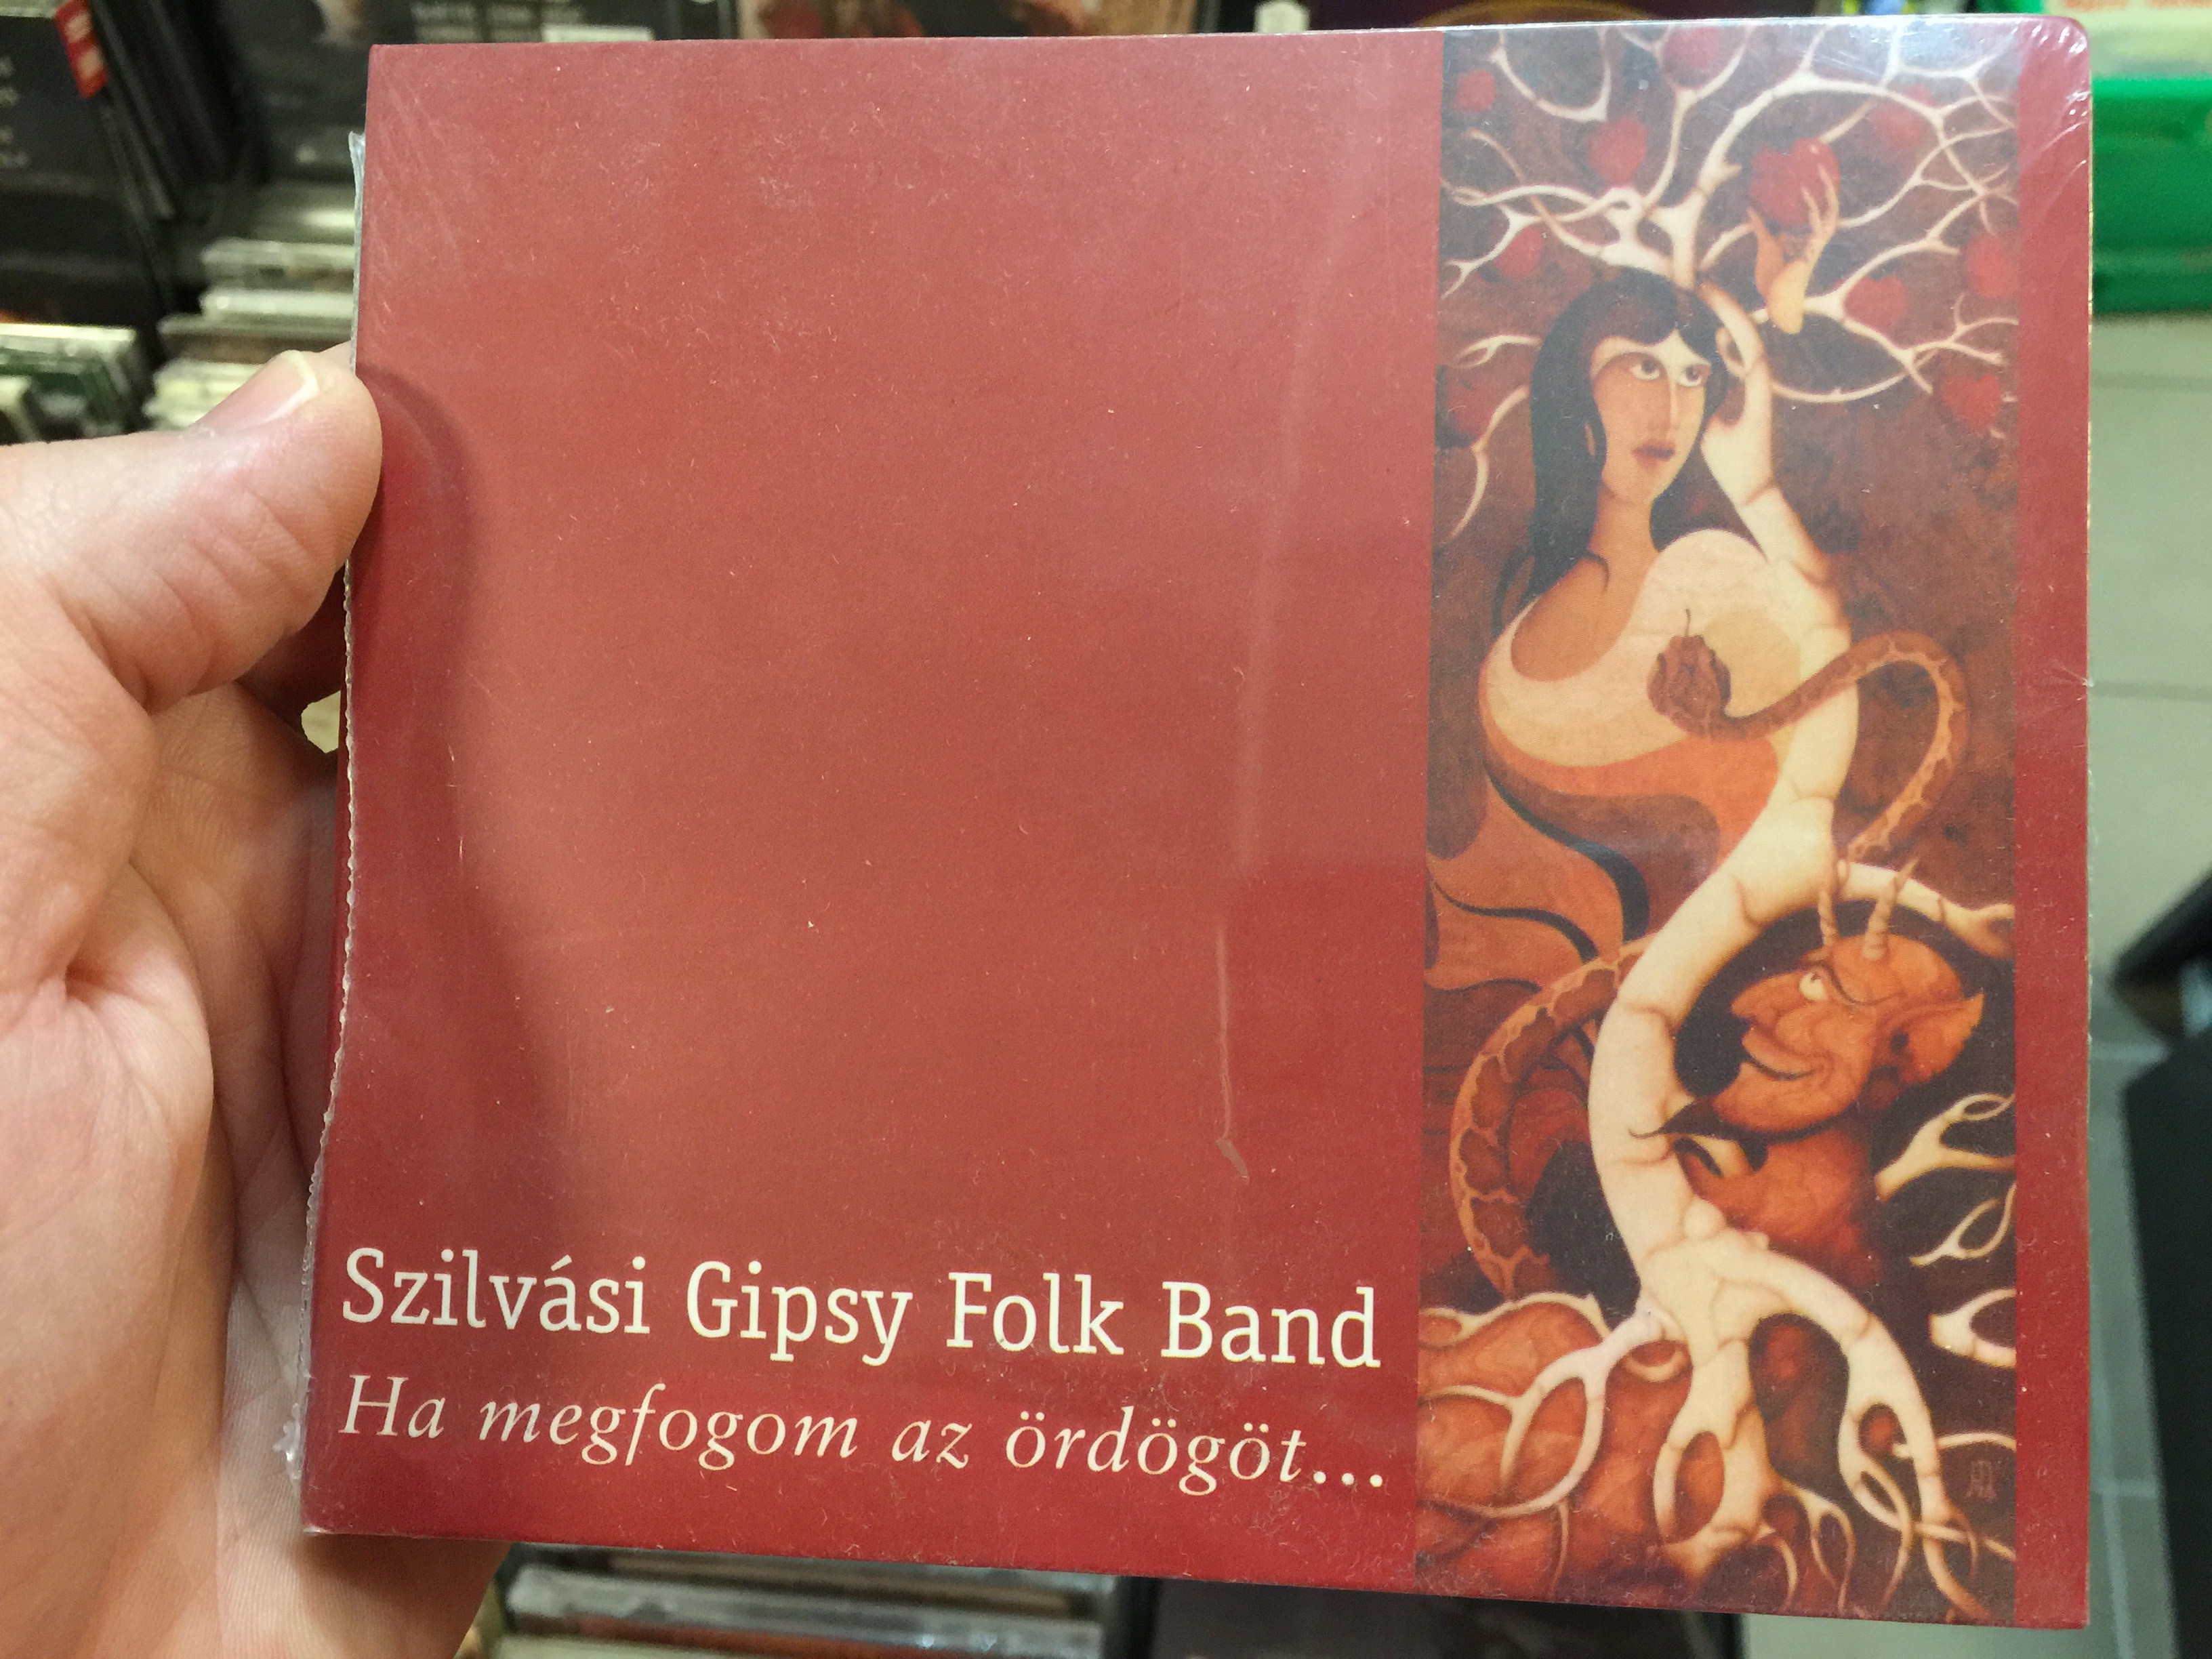 szilv-si-gipsy-folk-band-ha-megfogom-az-rd-g-t...-if-i-catch-the-devil...-fon-records-audio-cd-2001-fa-089-2-1-.jpg